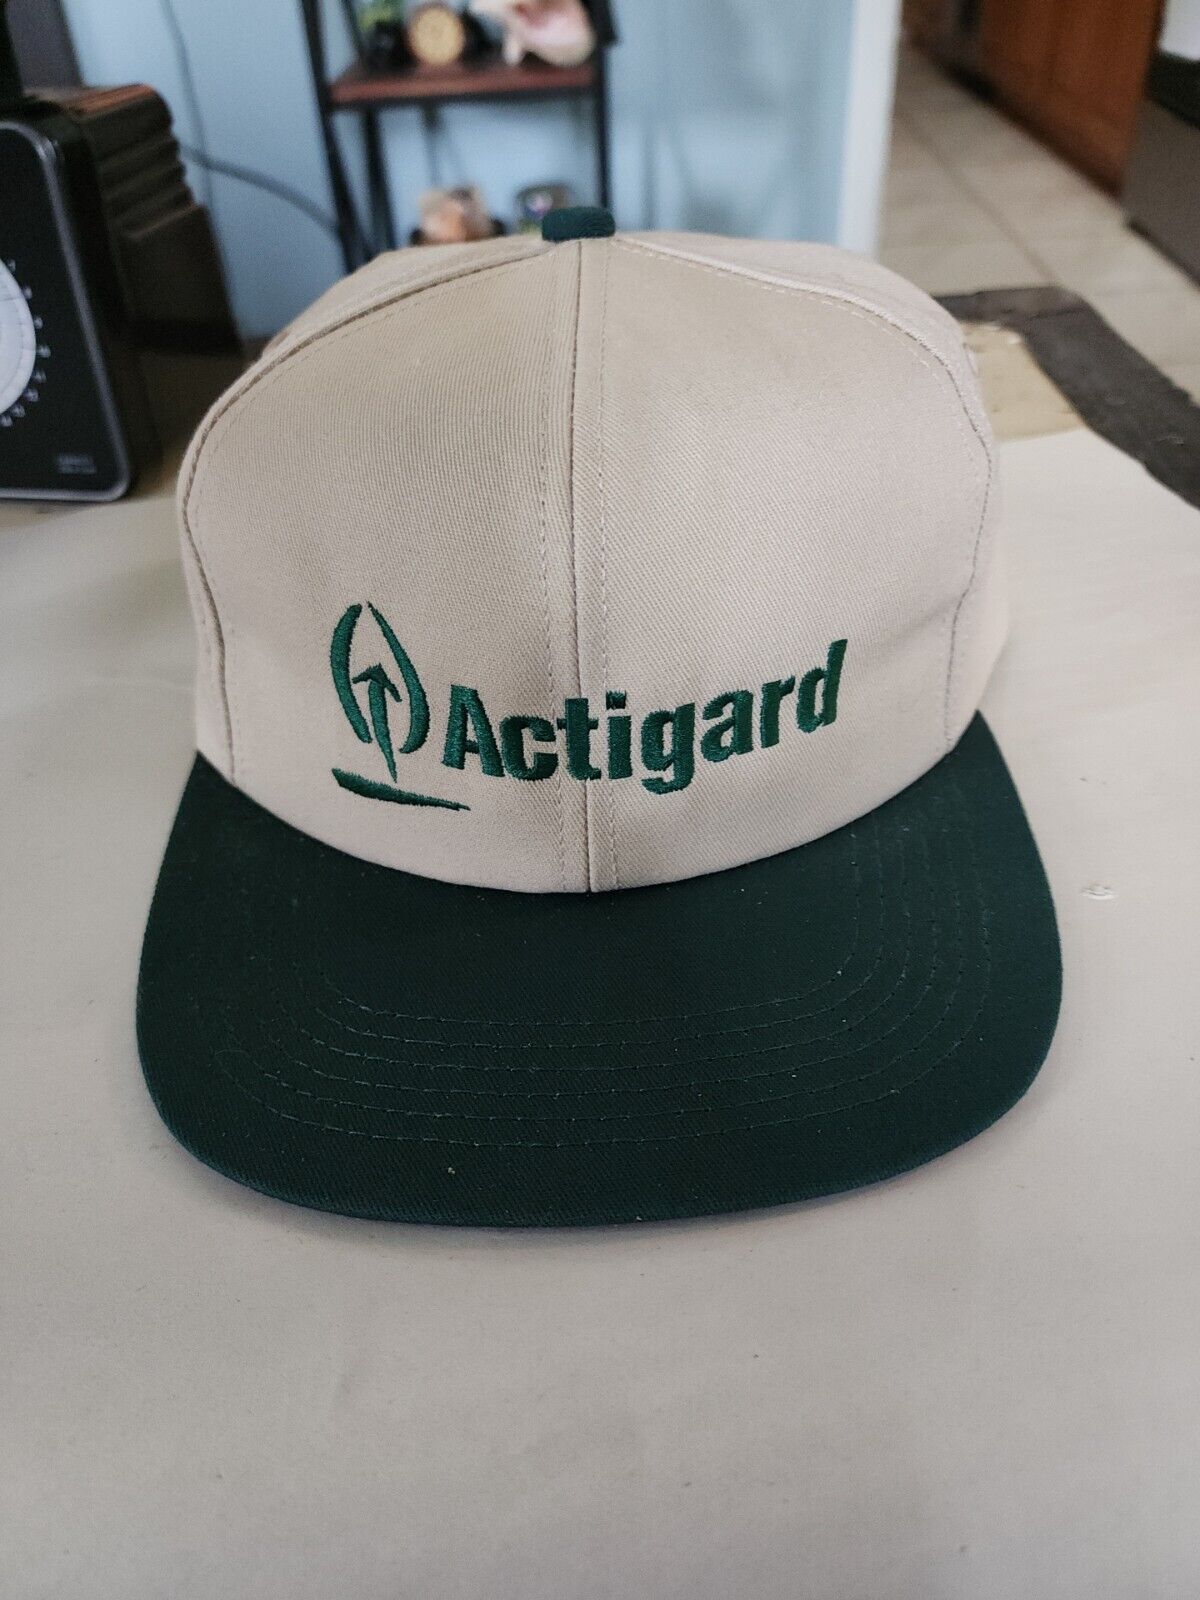 Actigard Tan Green SnapBack Hat NOS Fungicide By Syngenta Farming